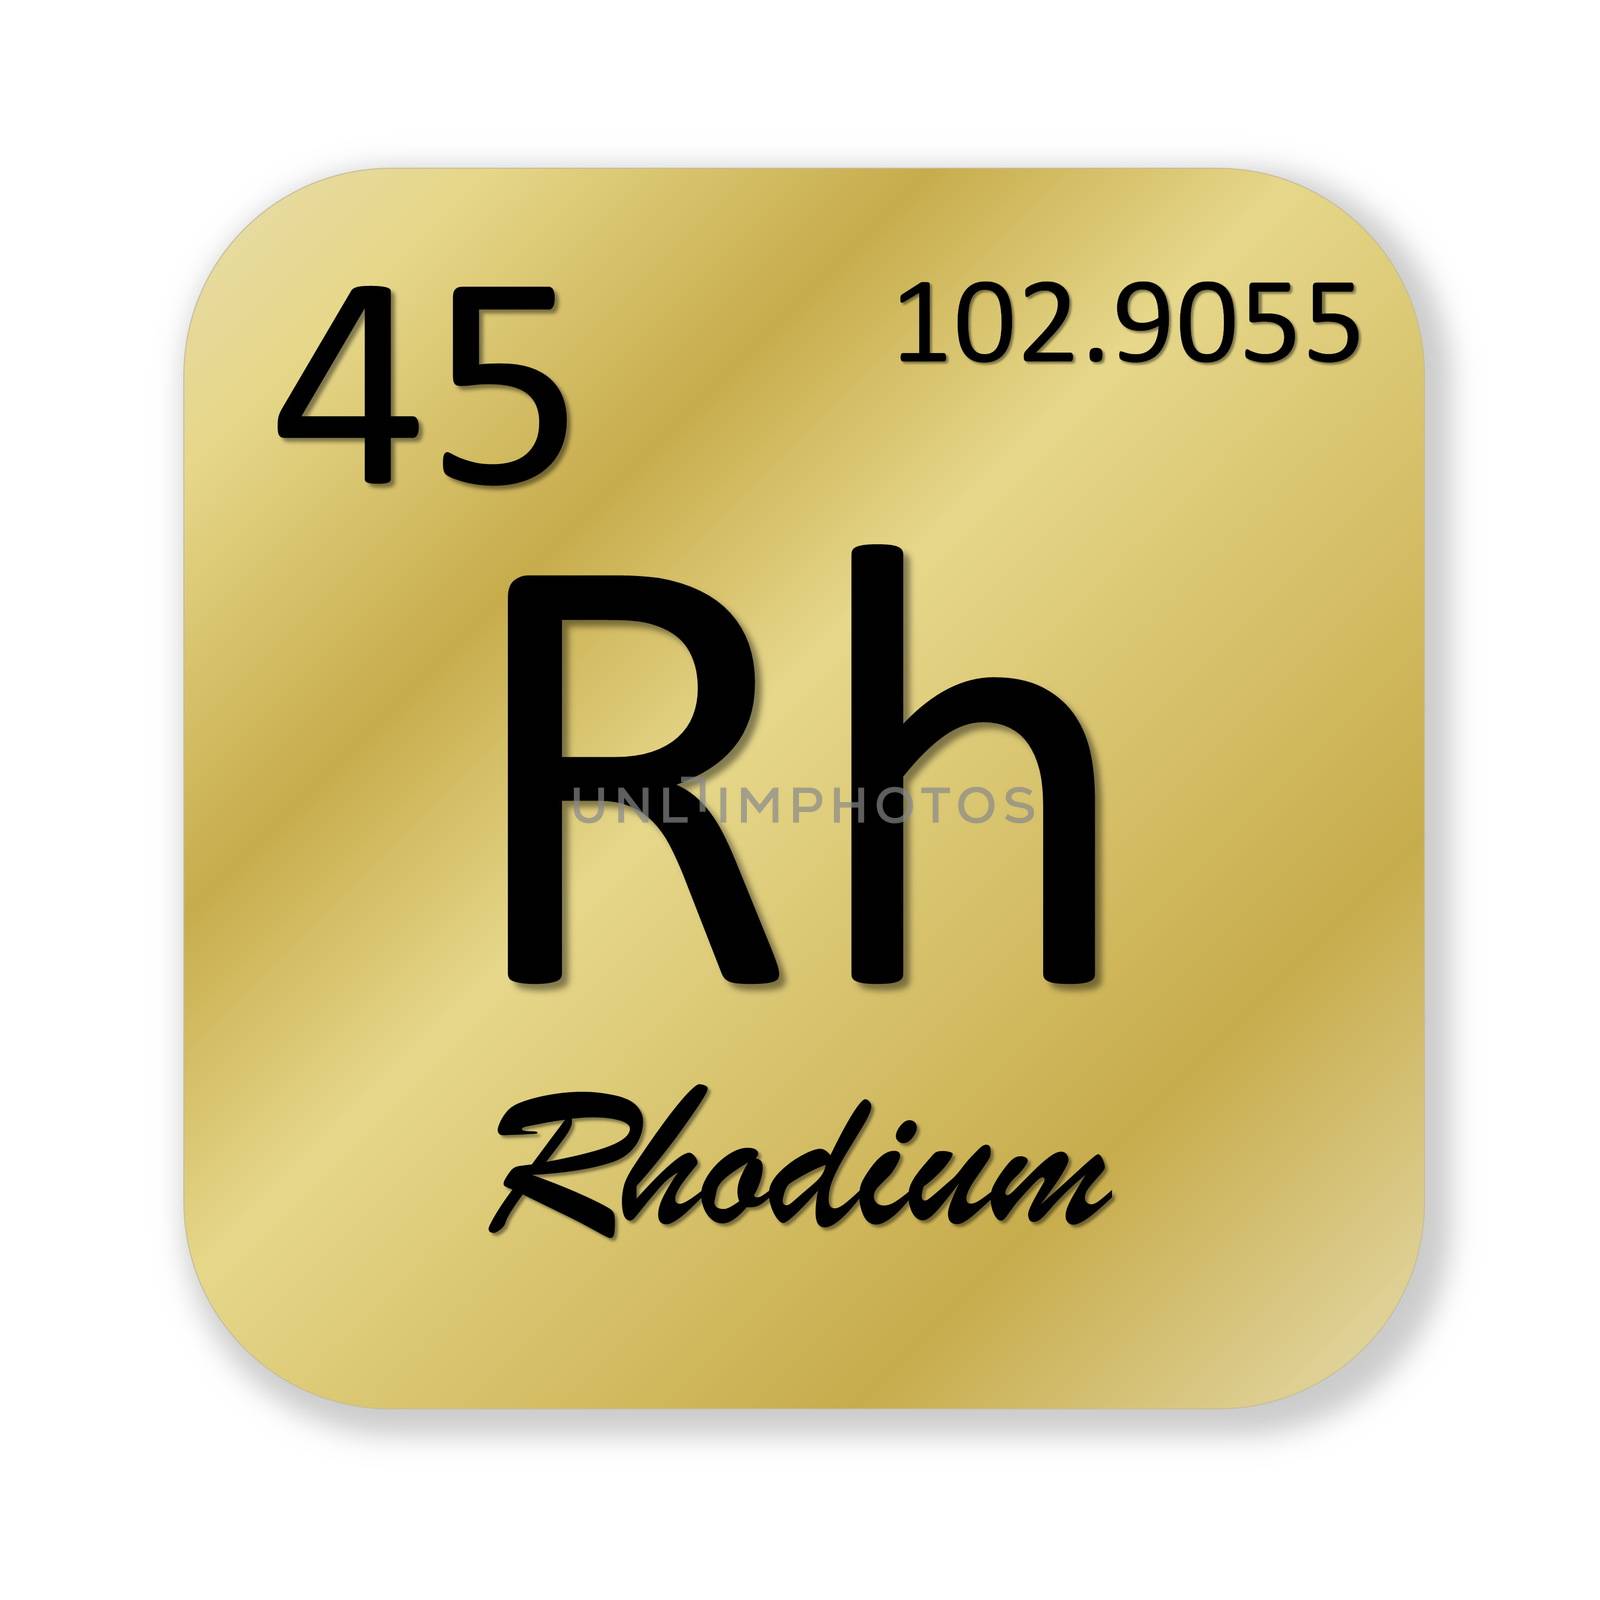 Rhodium element by Elenaphotos21